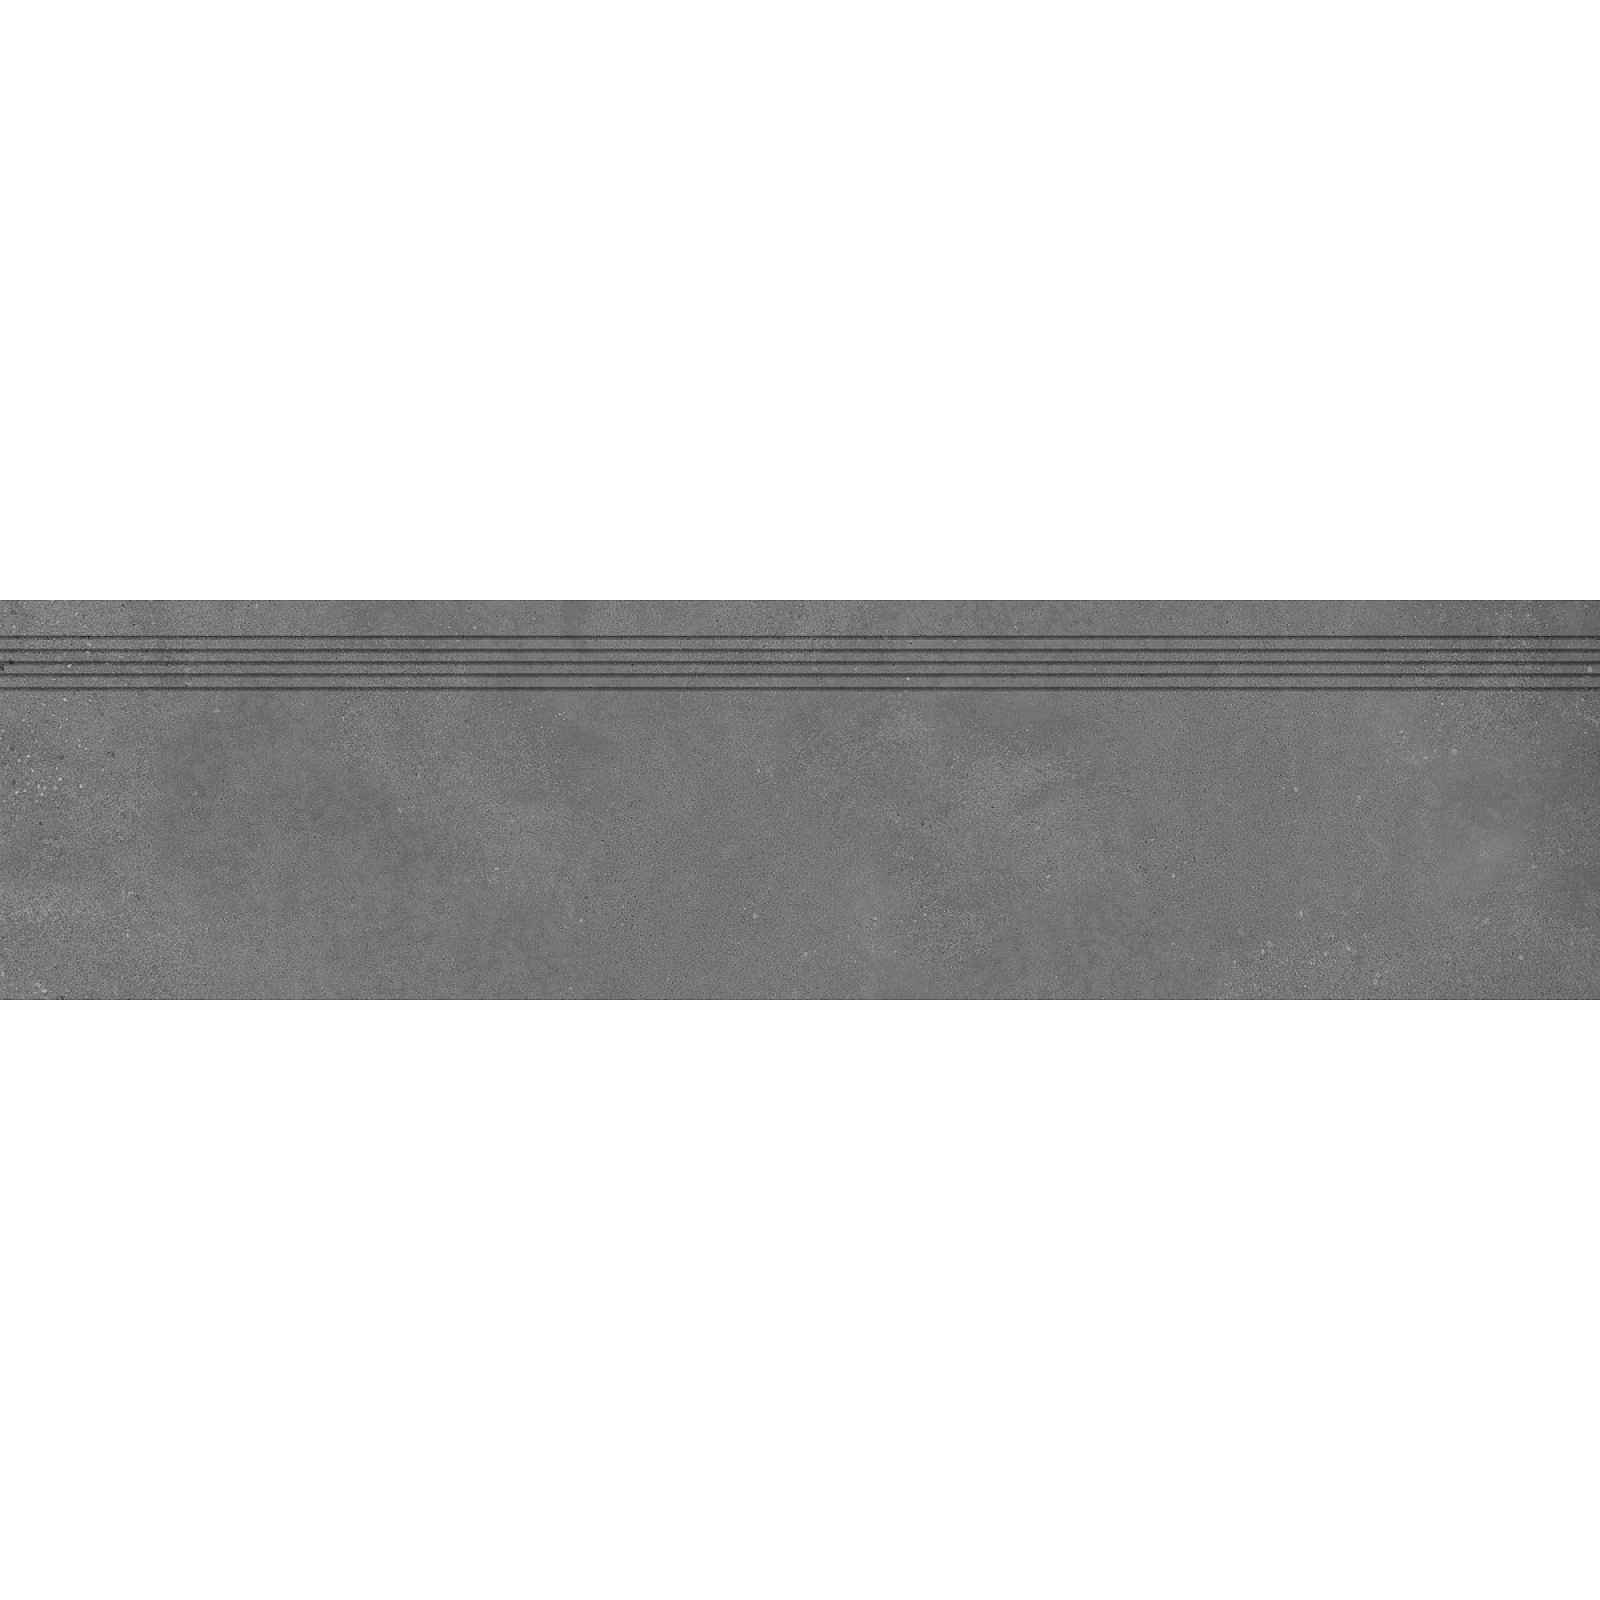 Schodovka RAKO Betonico černá 30x120 cm mat DCPVF792.1